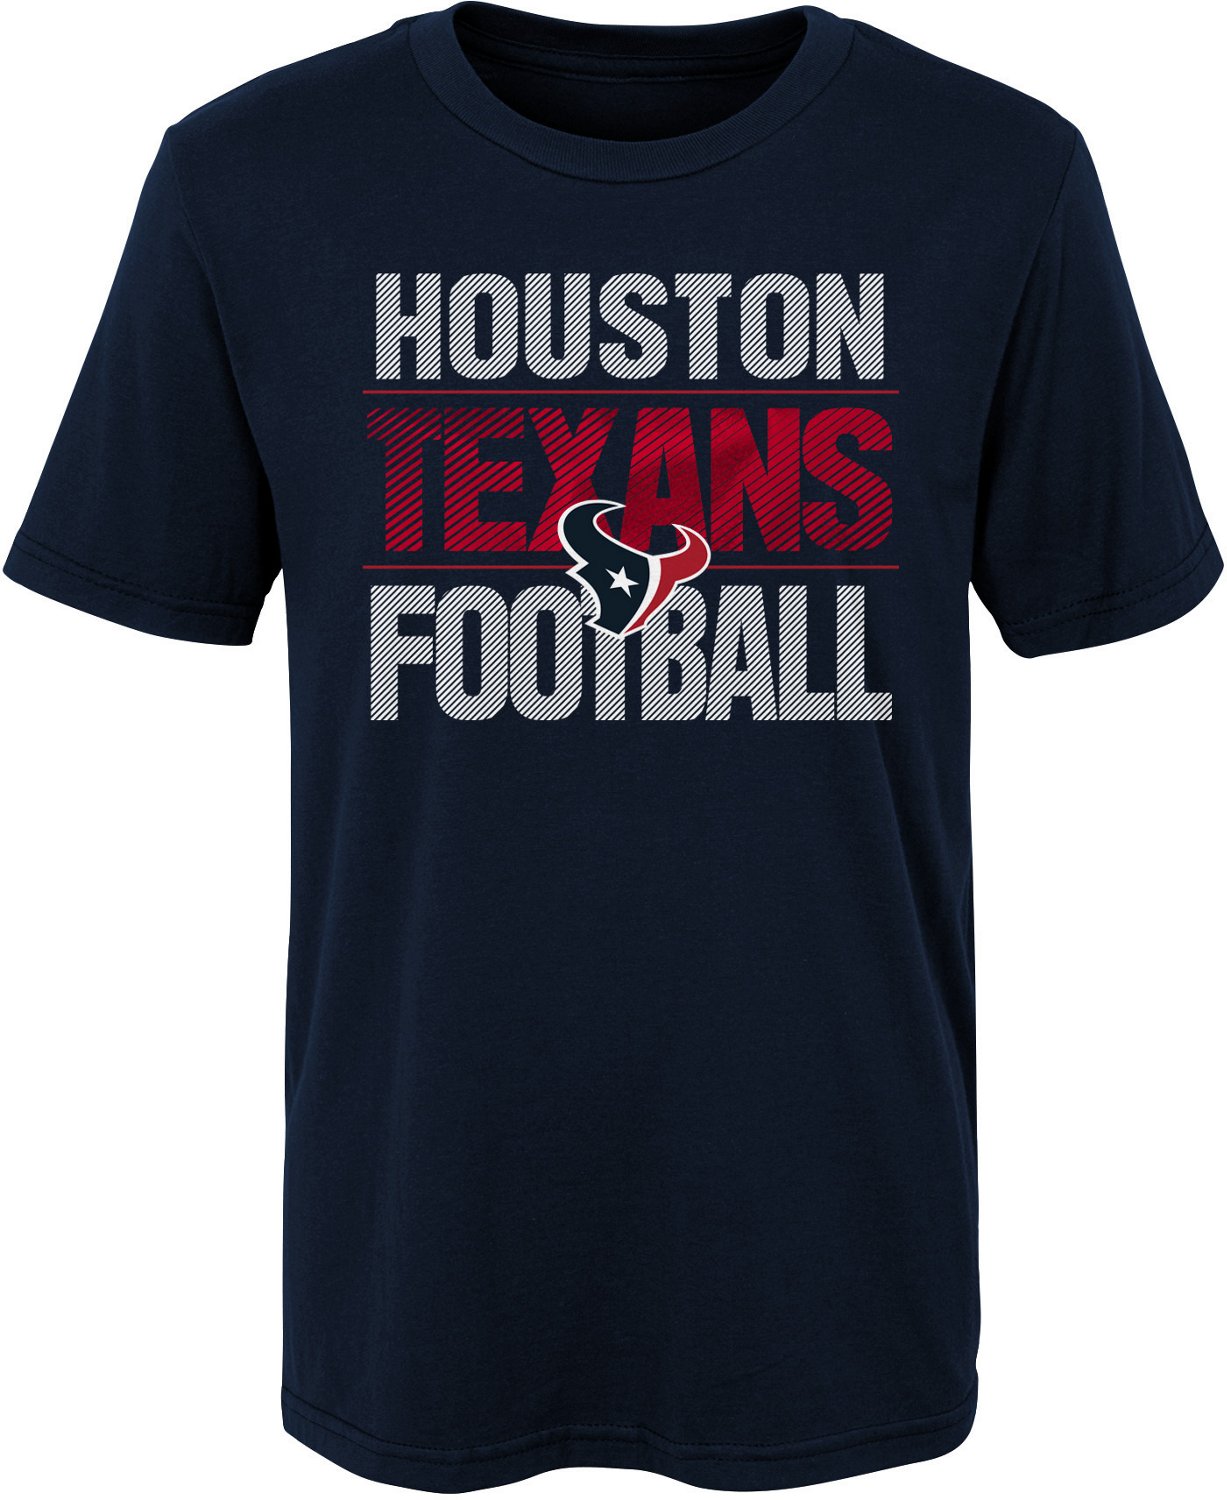 Houston Texans Jerseys, Shirts, \u0026 Gear 